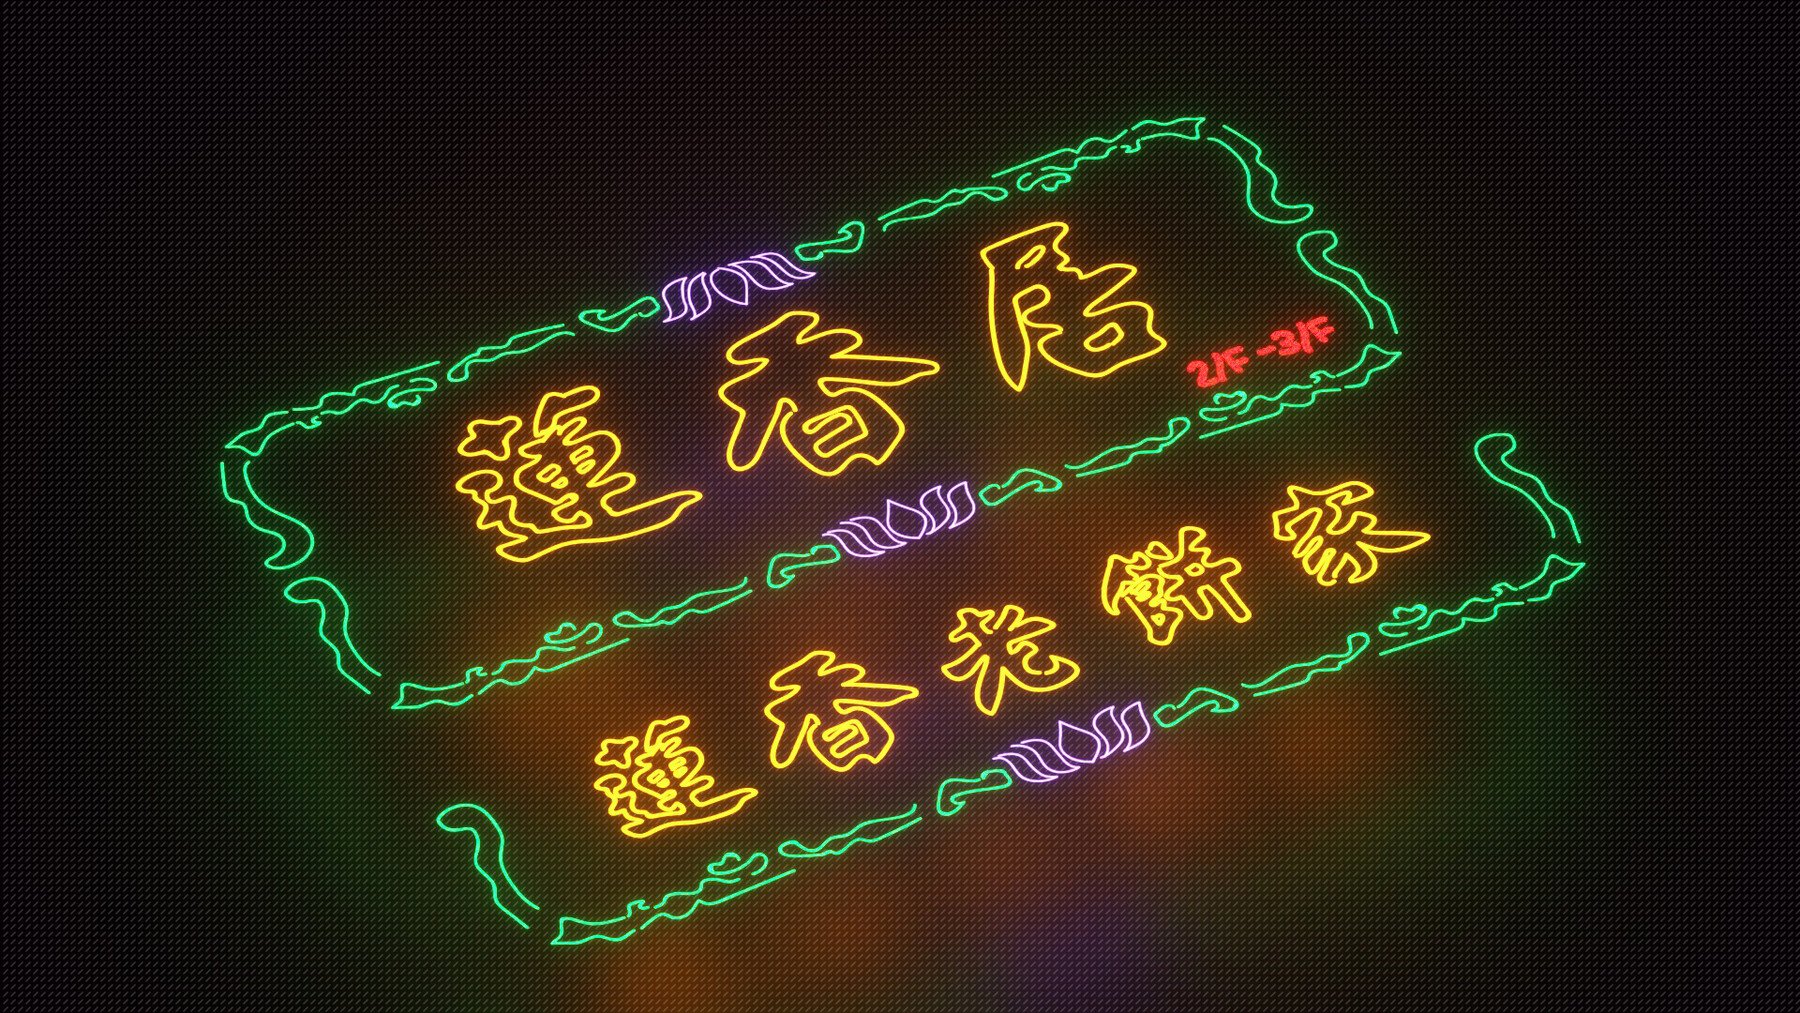 1211 手绘传统霓虹灯纹理矢量设计素材 Hand drawn Traditional Neon Signs